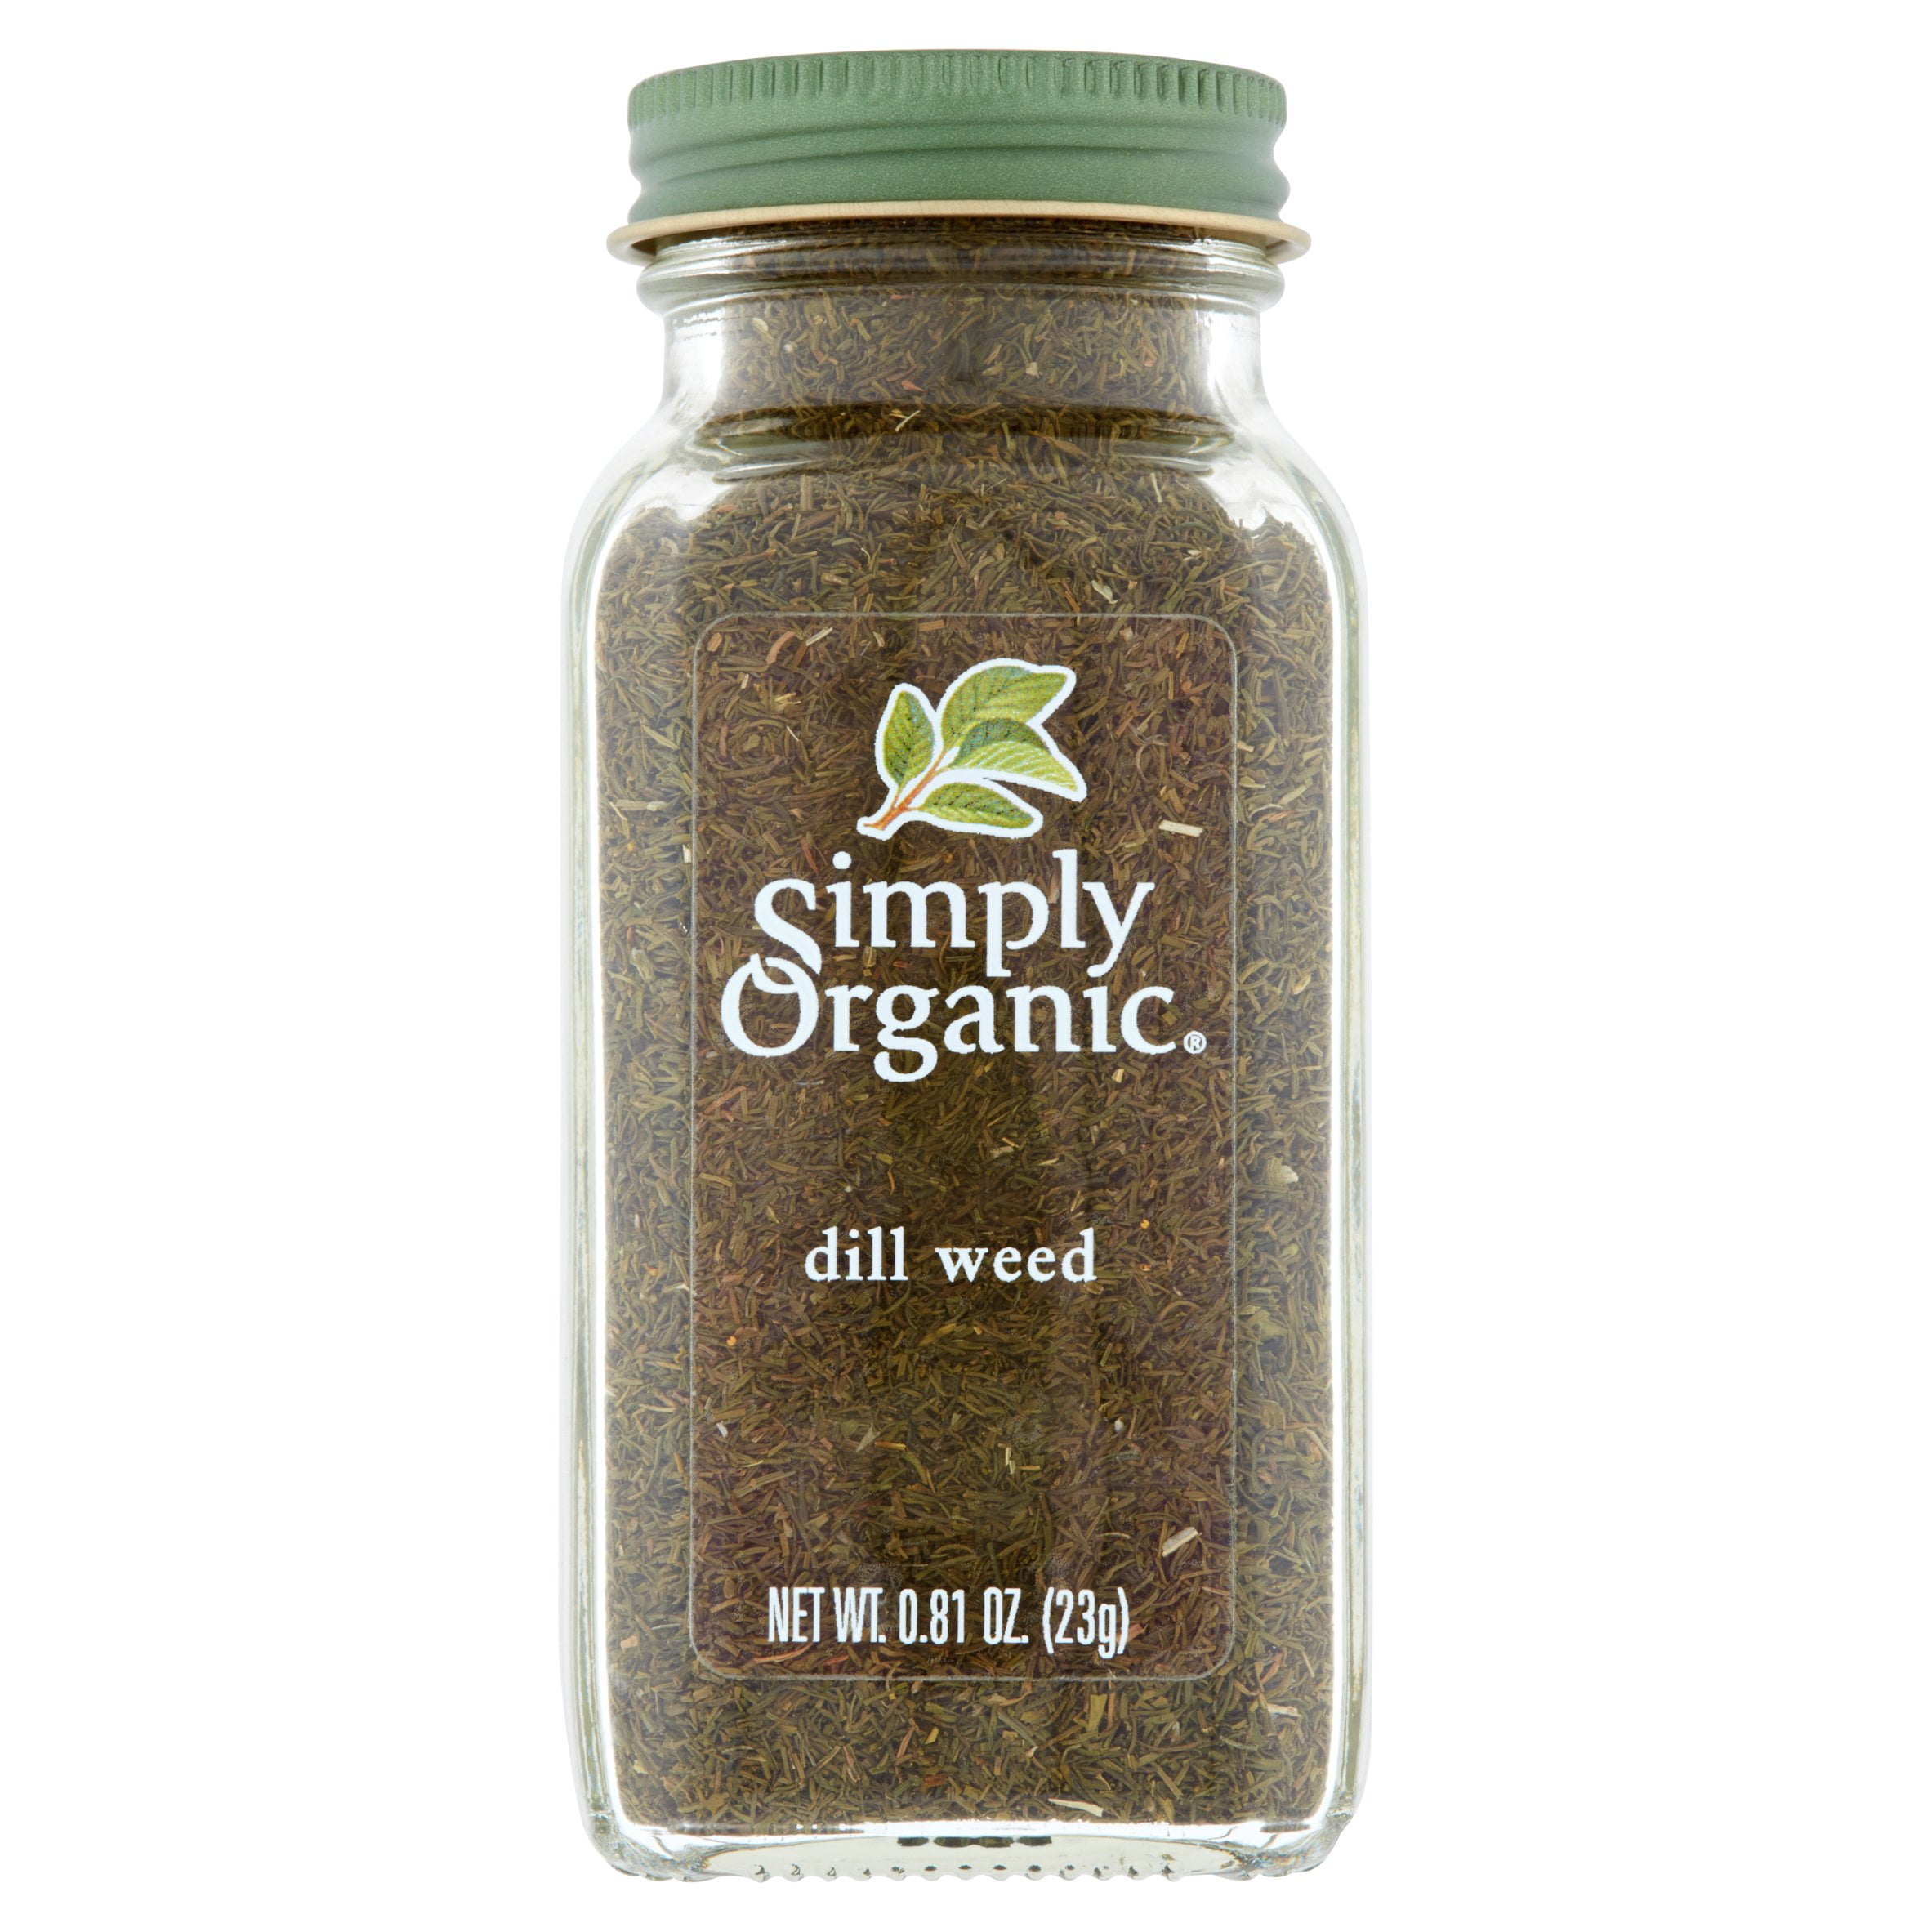 Simply Organic Dill Weed, 0.81 oz, 6 pack - Walmart.com